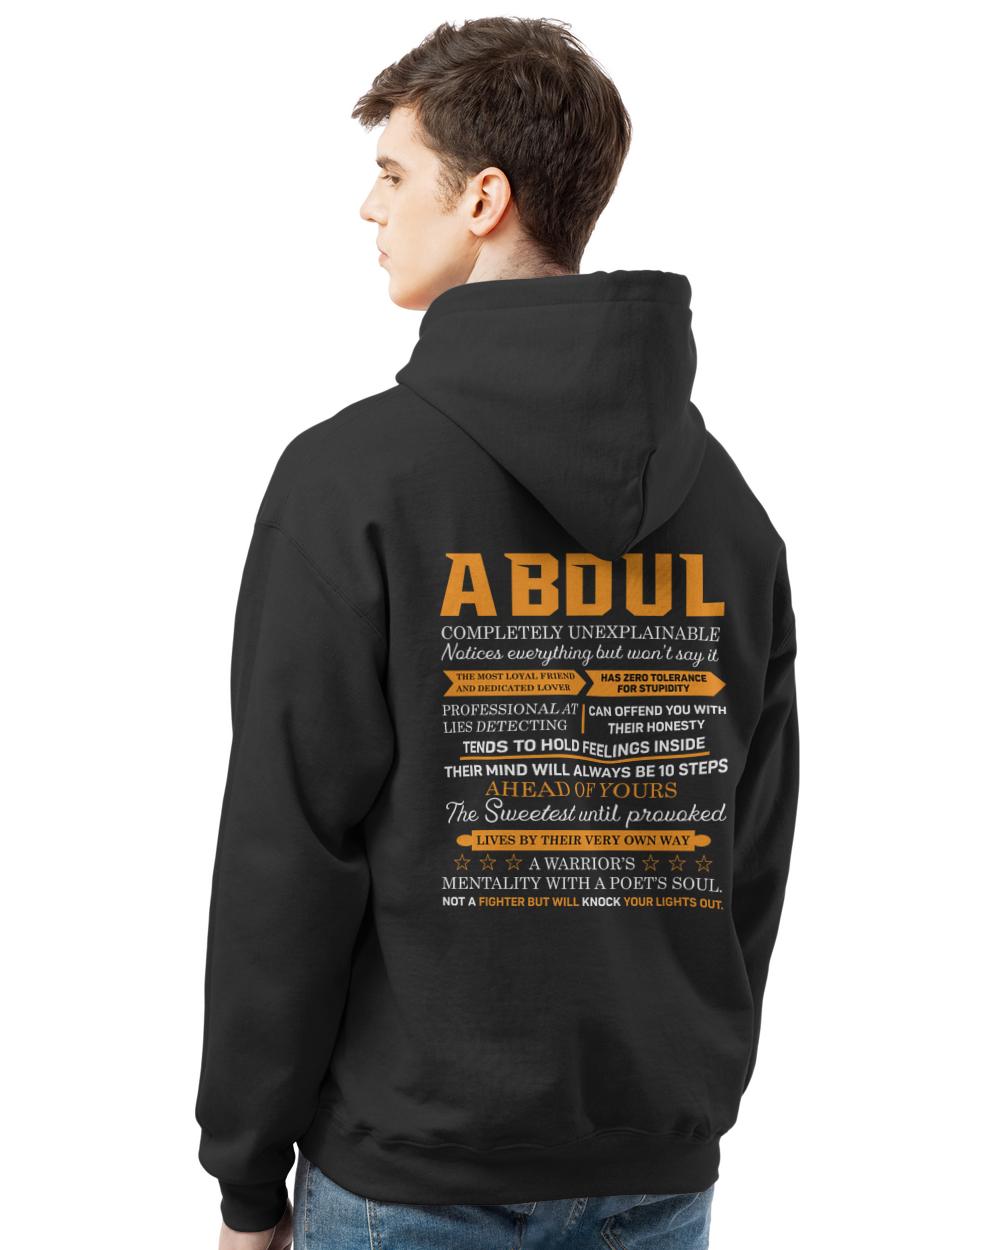 ABDUL-13K-N1-01